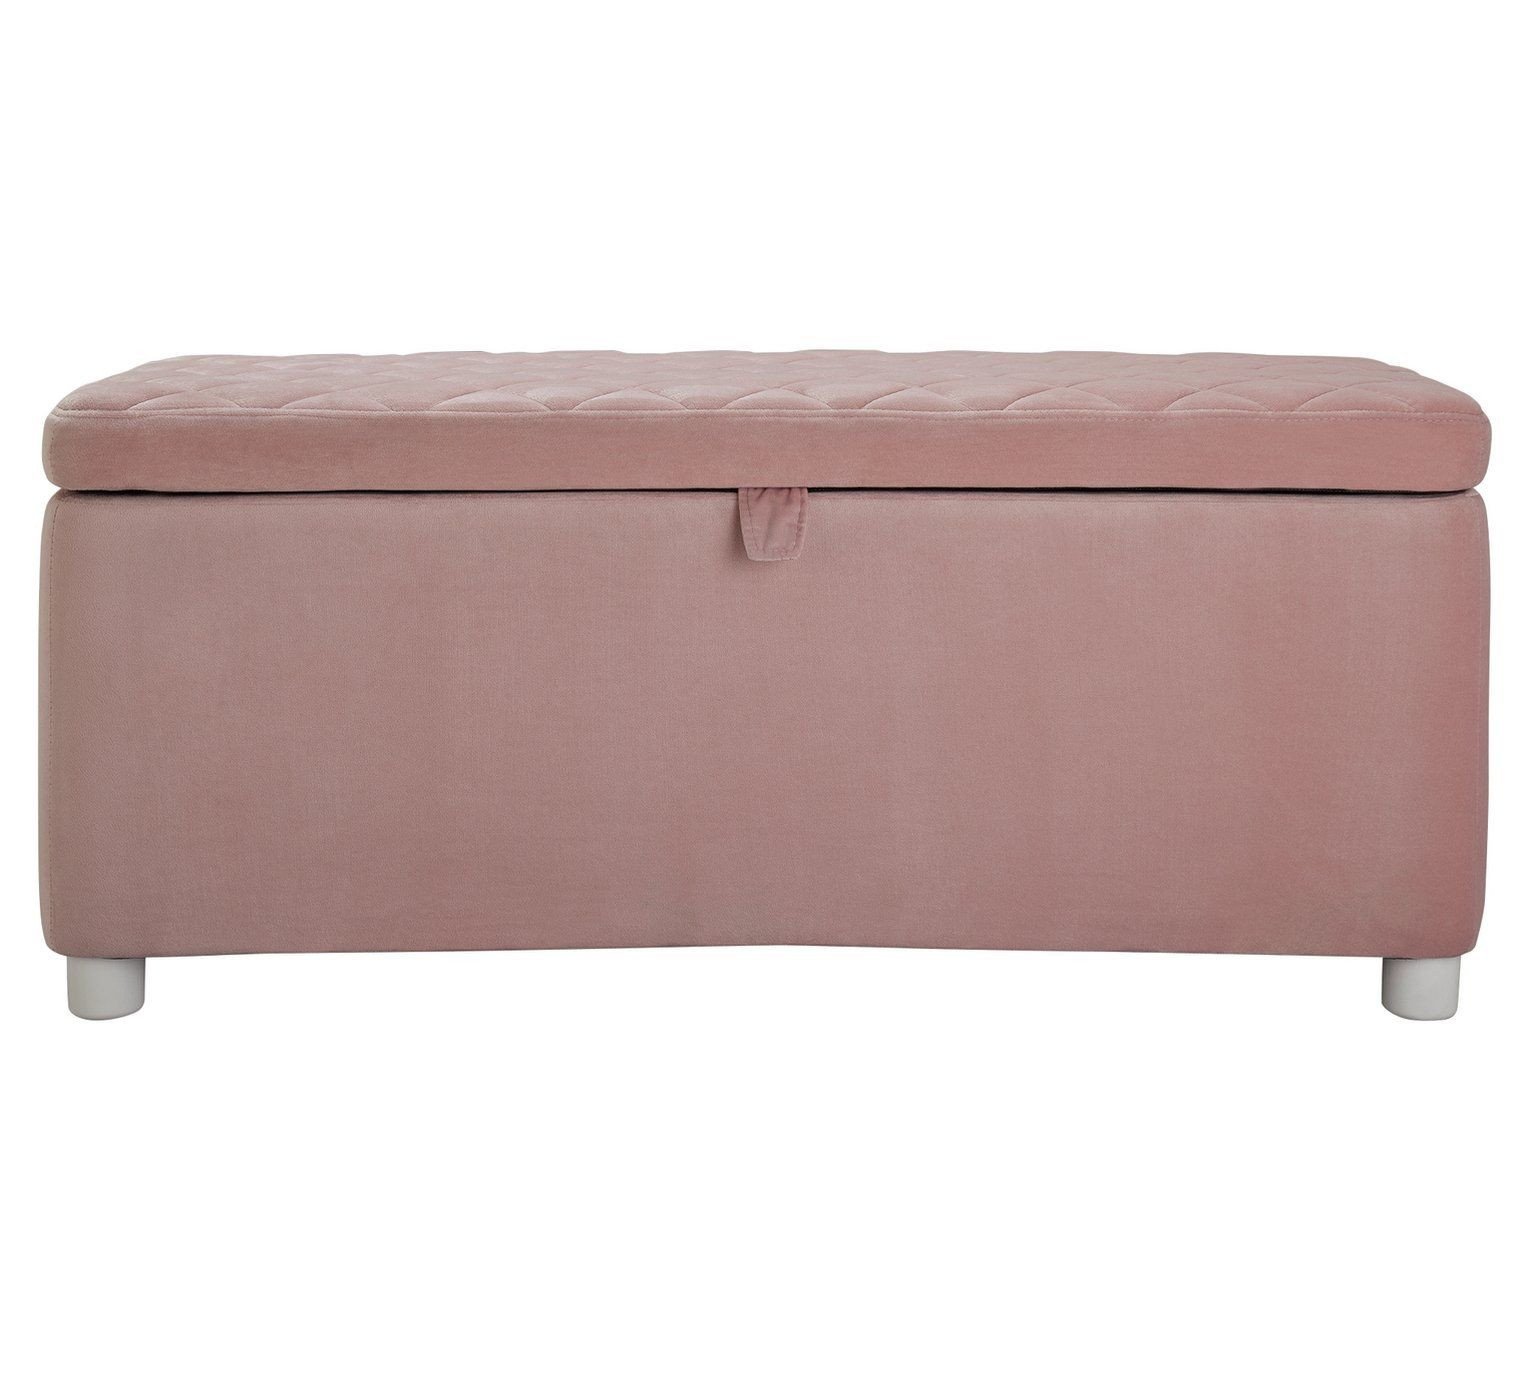 Bedroom Ottoman Storage Bench Luxury Buy Argos Home Velvet Ottoman Blush Pink